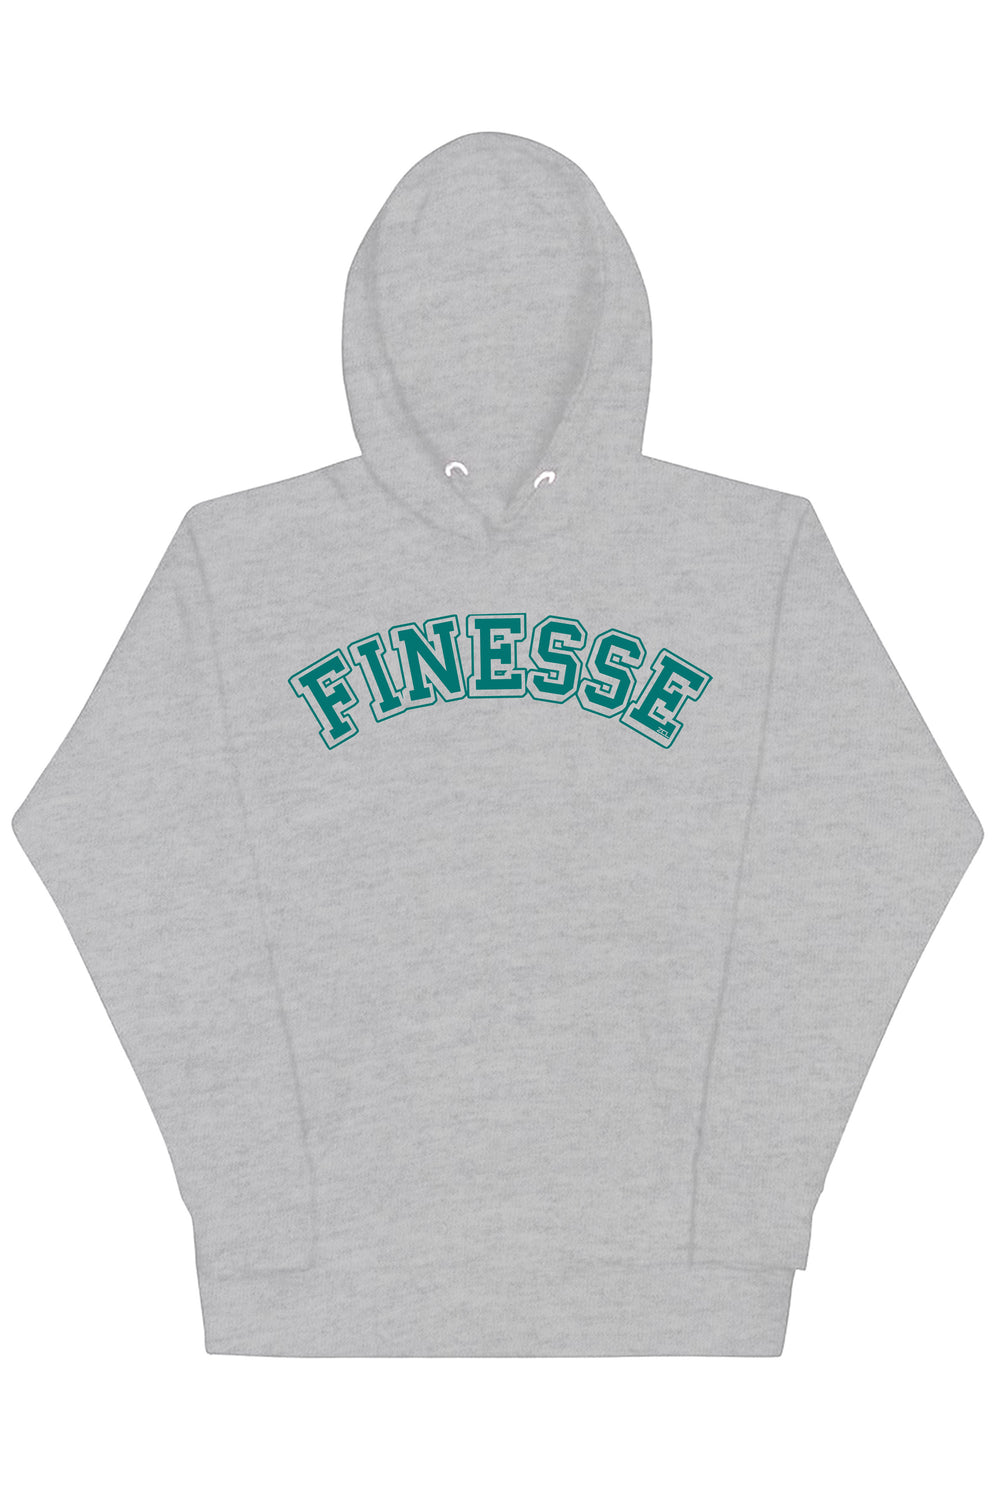 Finesse Hoodie (Teal Logo) - Zamage